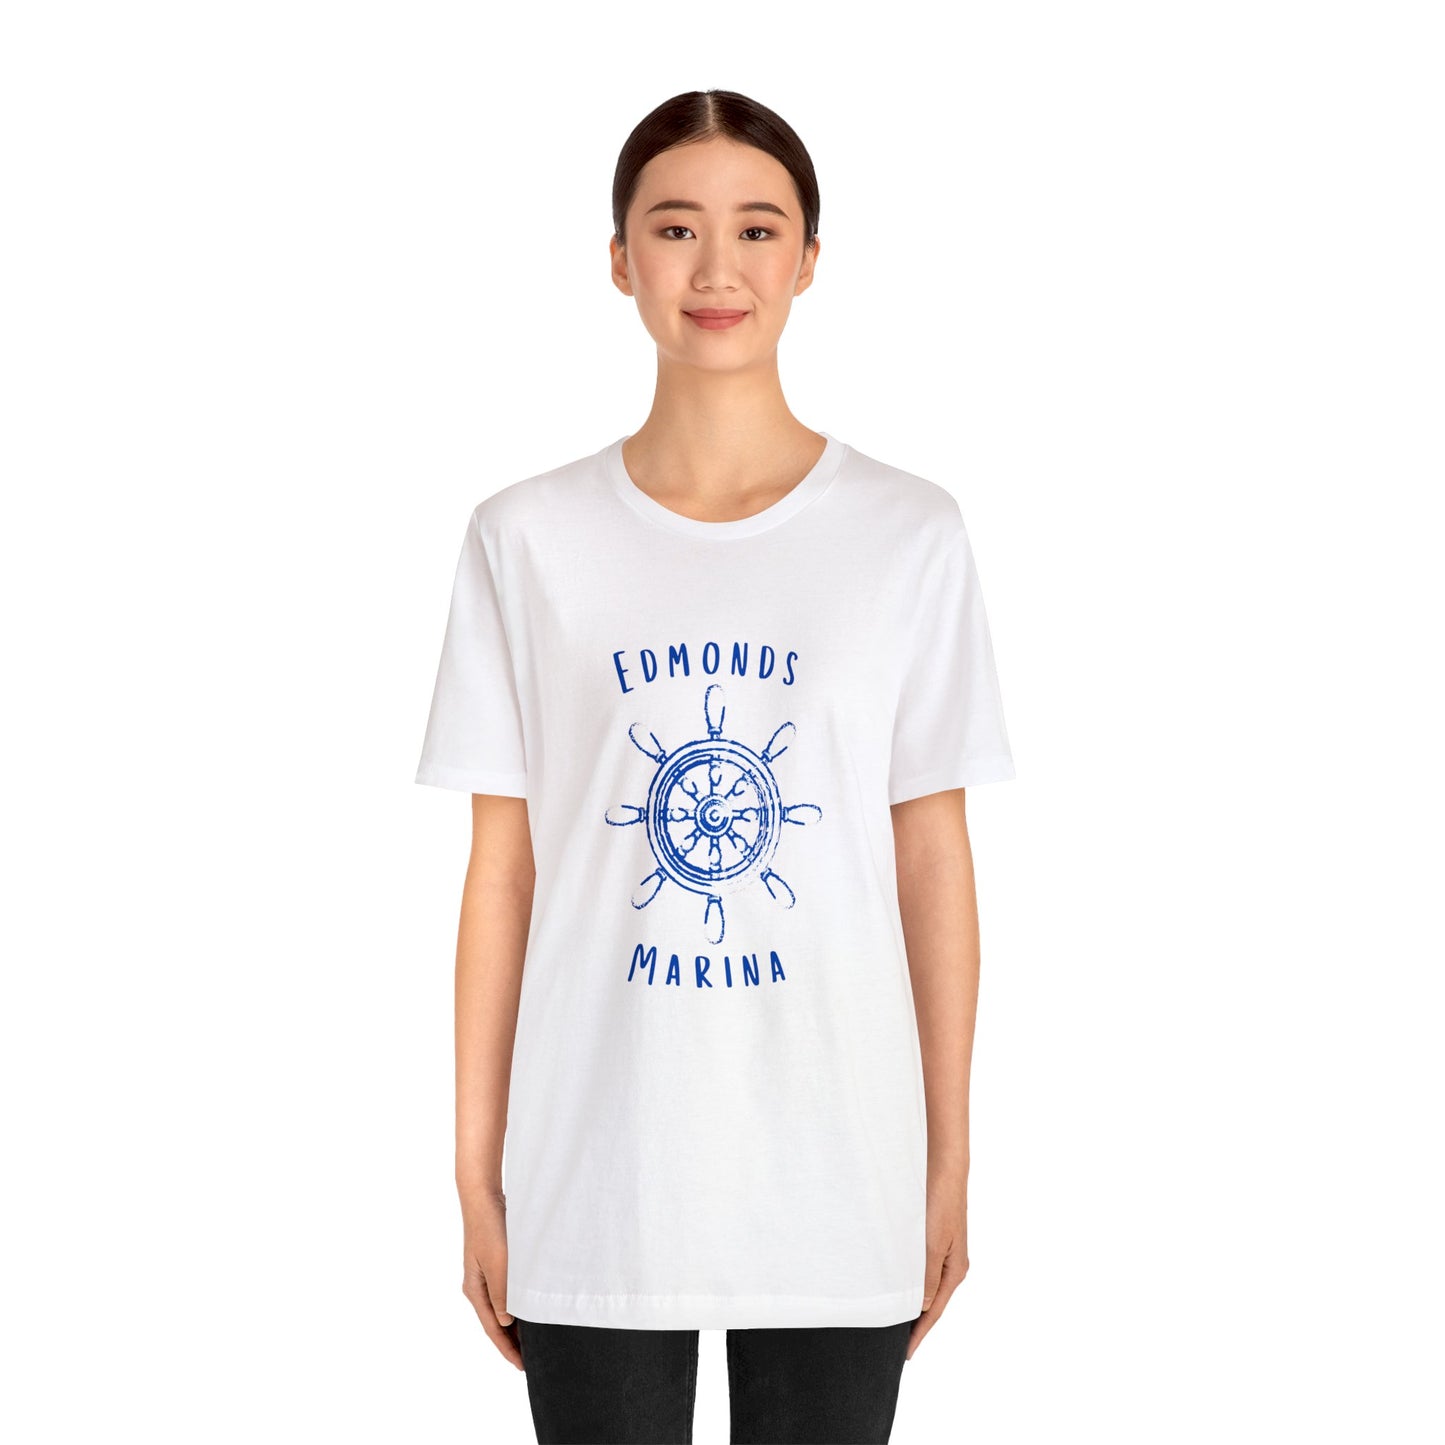 Edmonds Marina T-shirt